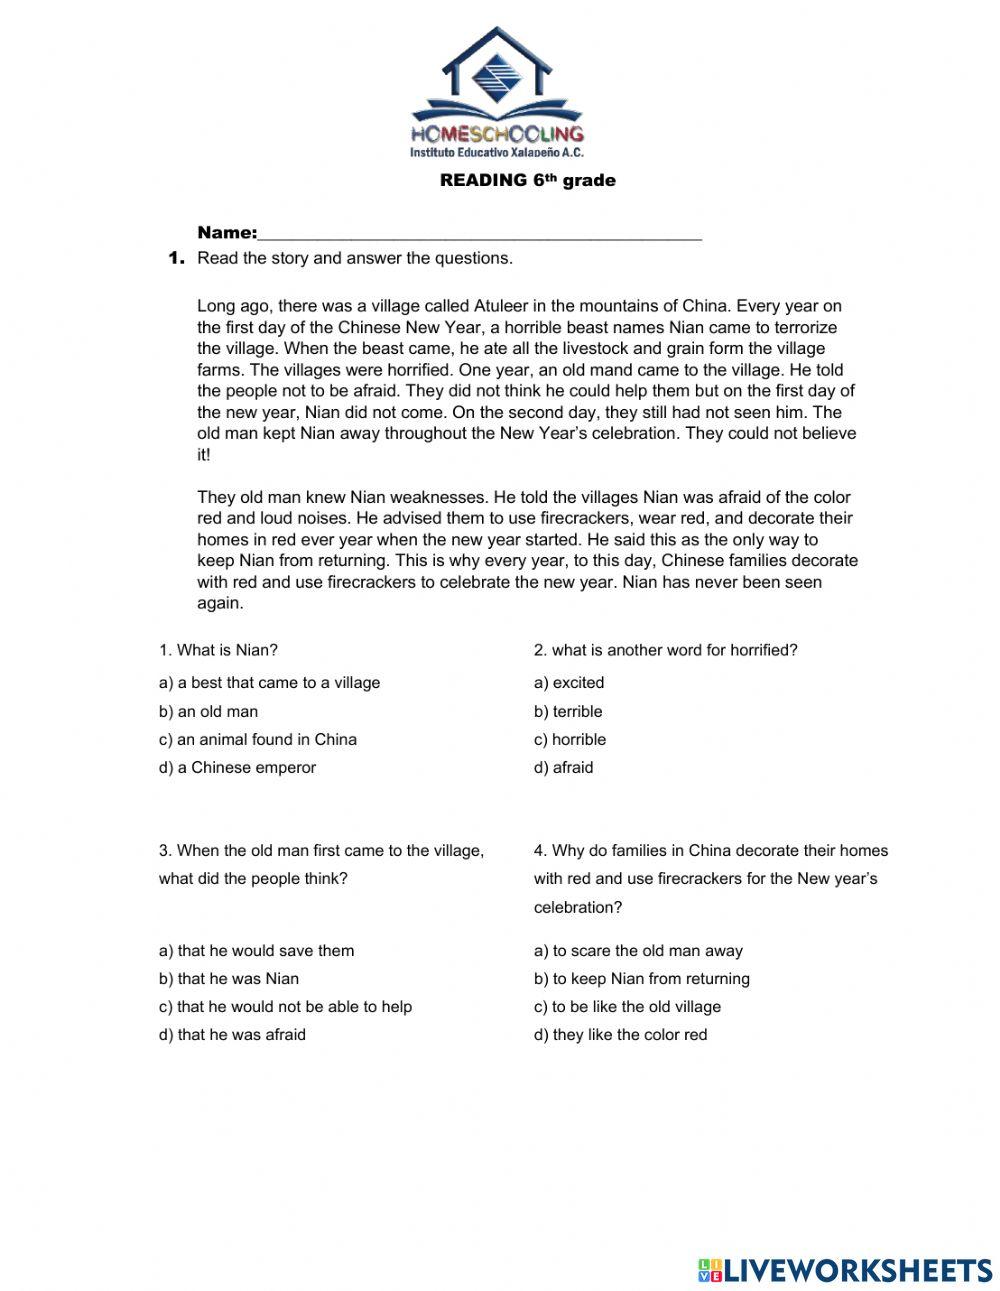 Reading Exam 6th grade worksheet | Live Worksheets